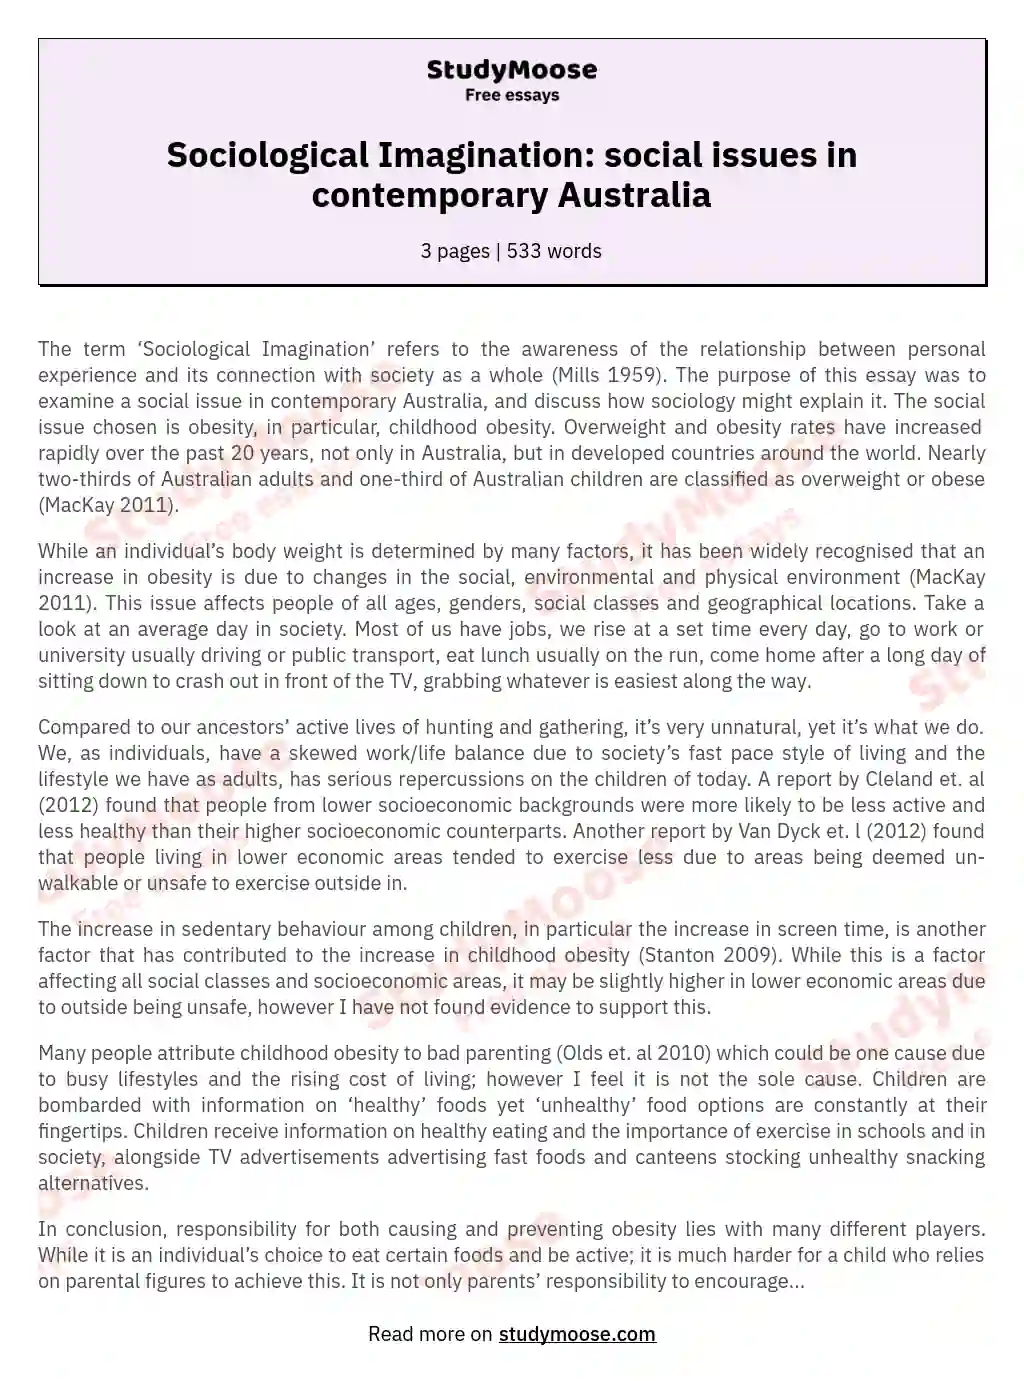 Sociological Imagination: social issues in contemporary Australia essay